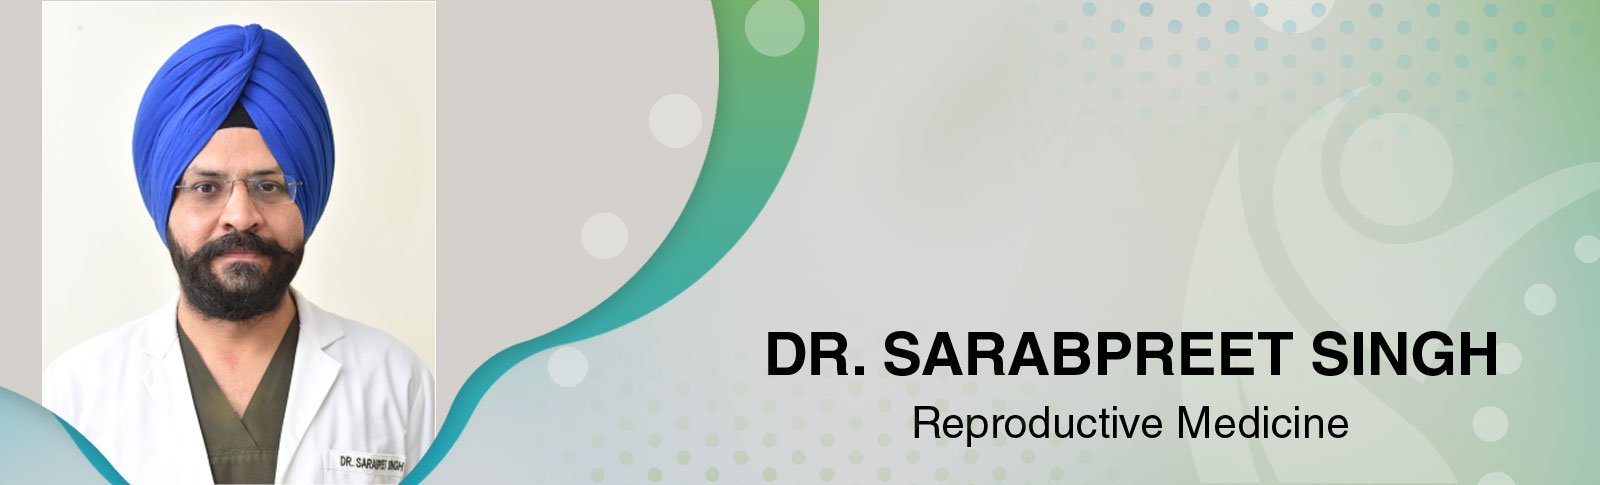 Dr. SARABPREET SINGH